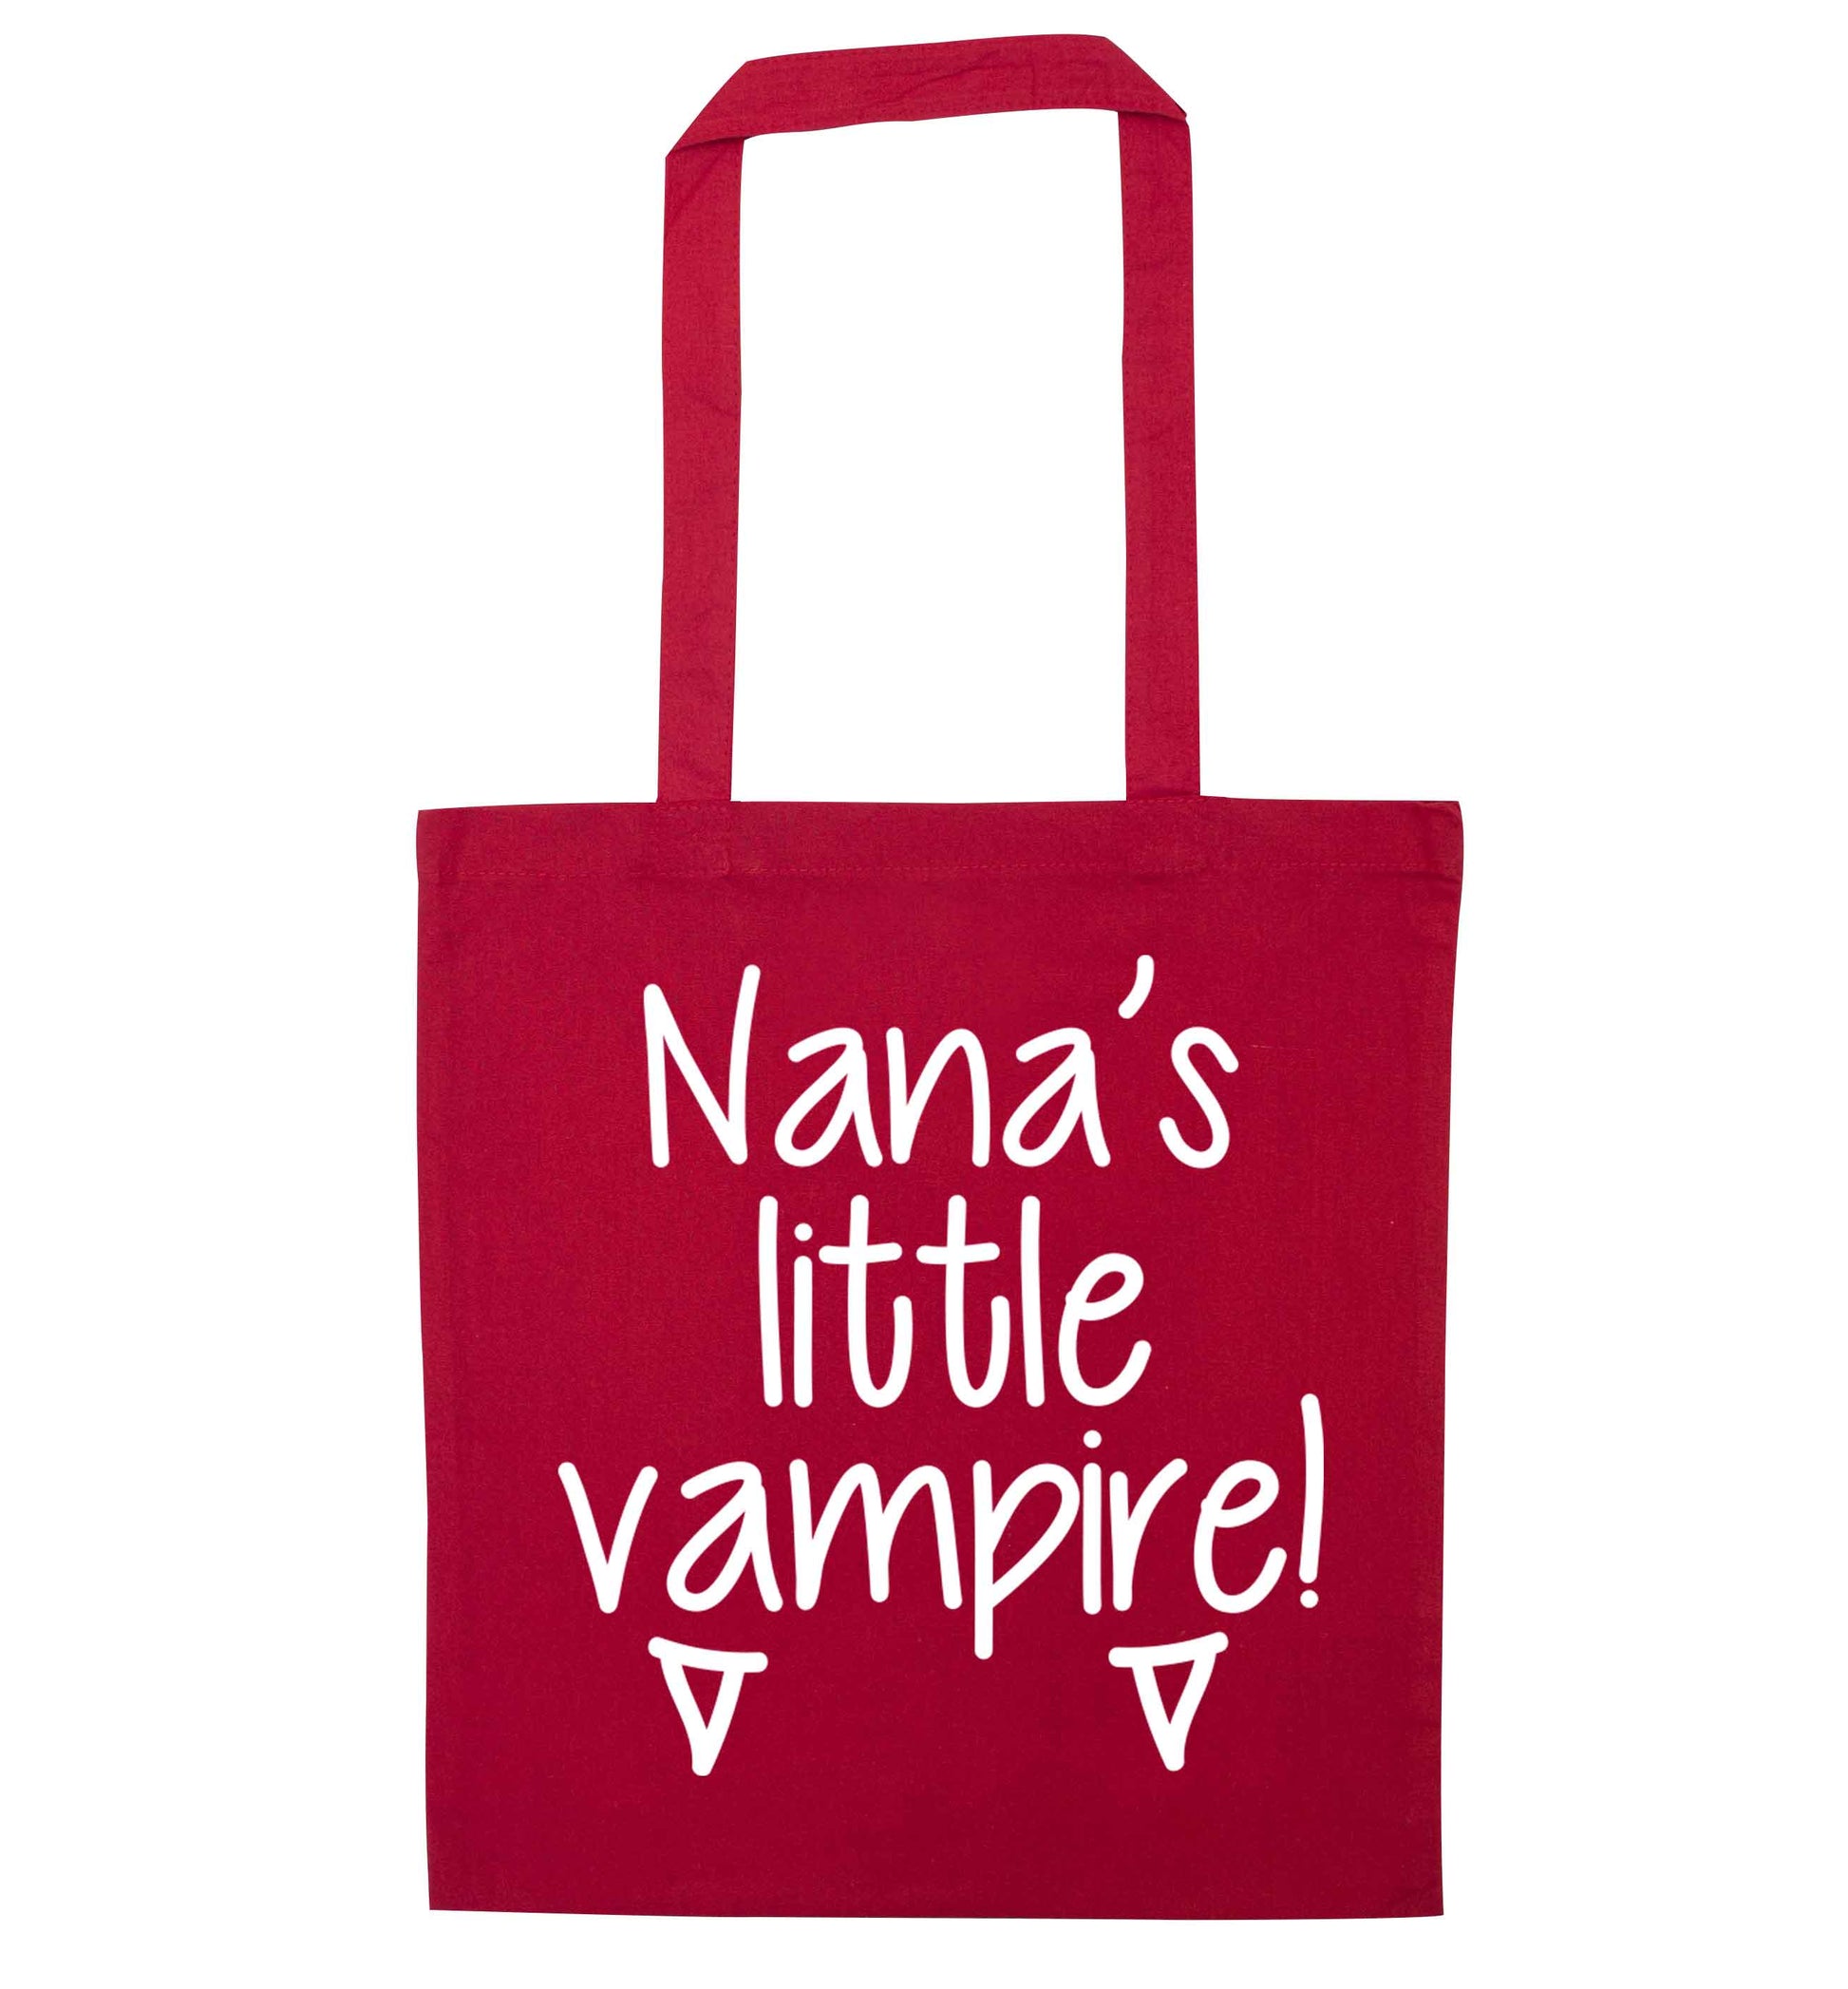 Nana's little vampire red tote bag